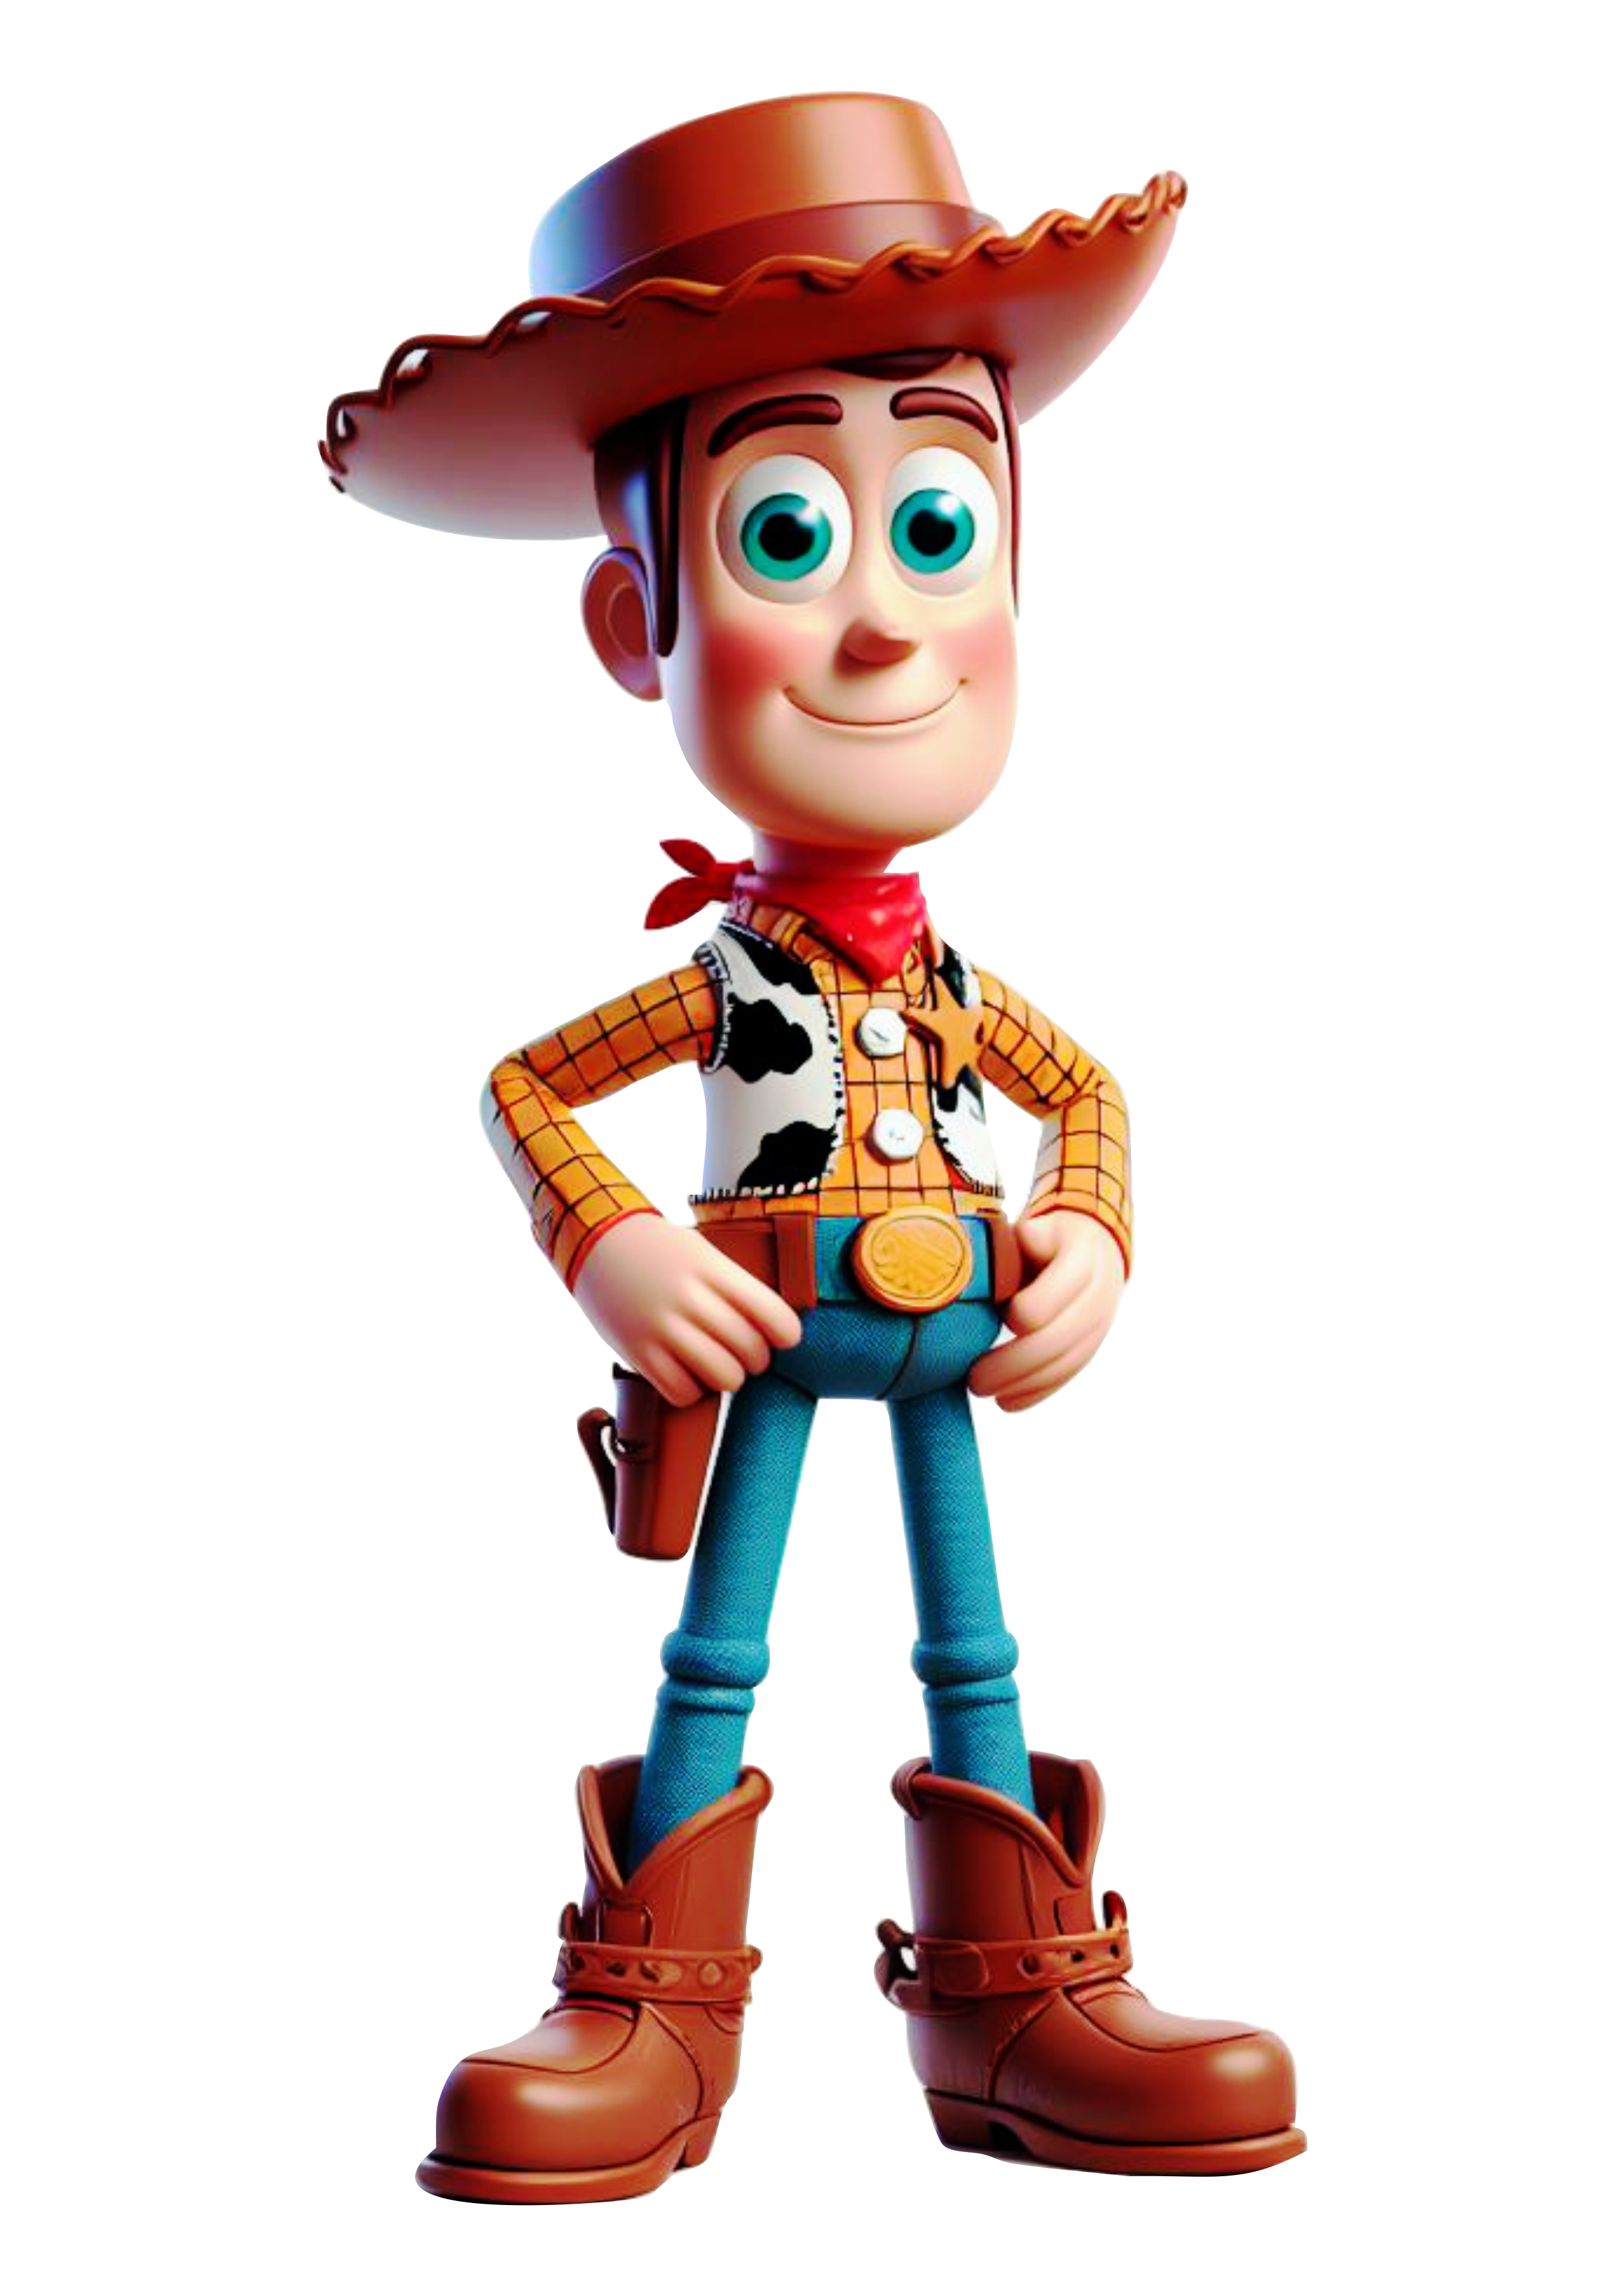 Xerife Woody Toy Story animação infantil Disney png image clipart fundo transparente